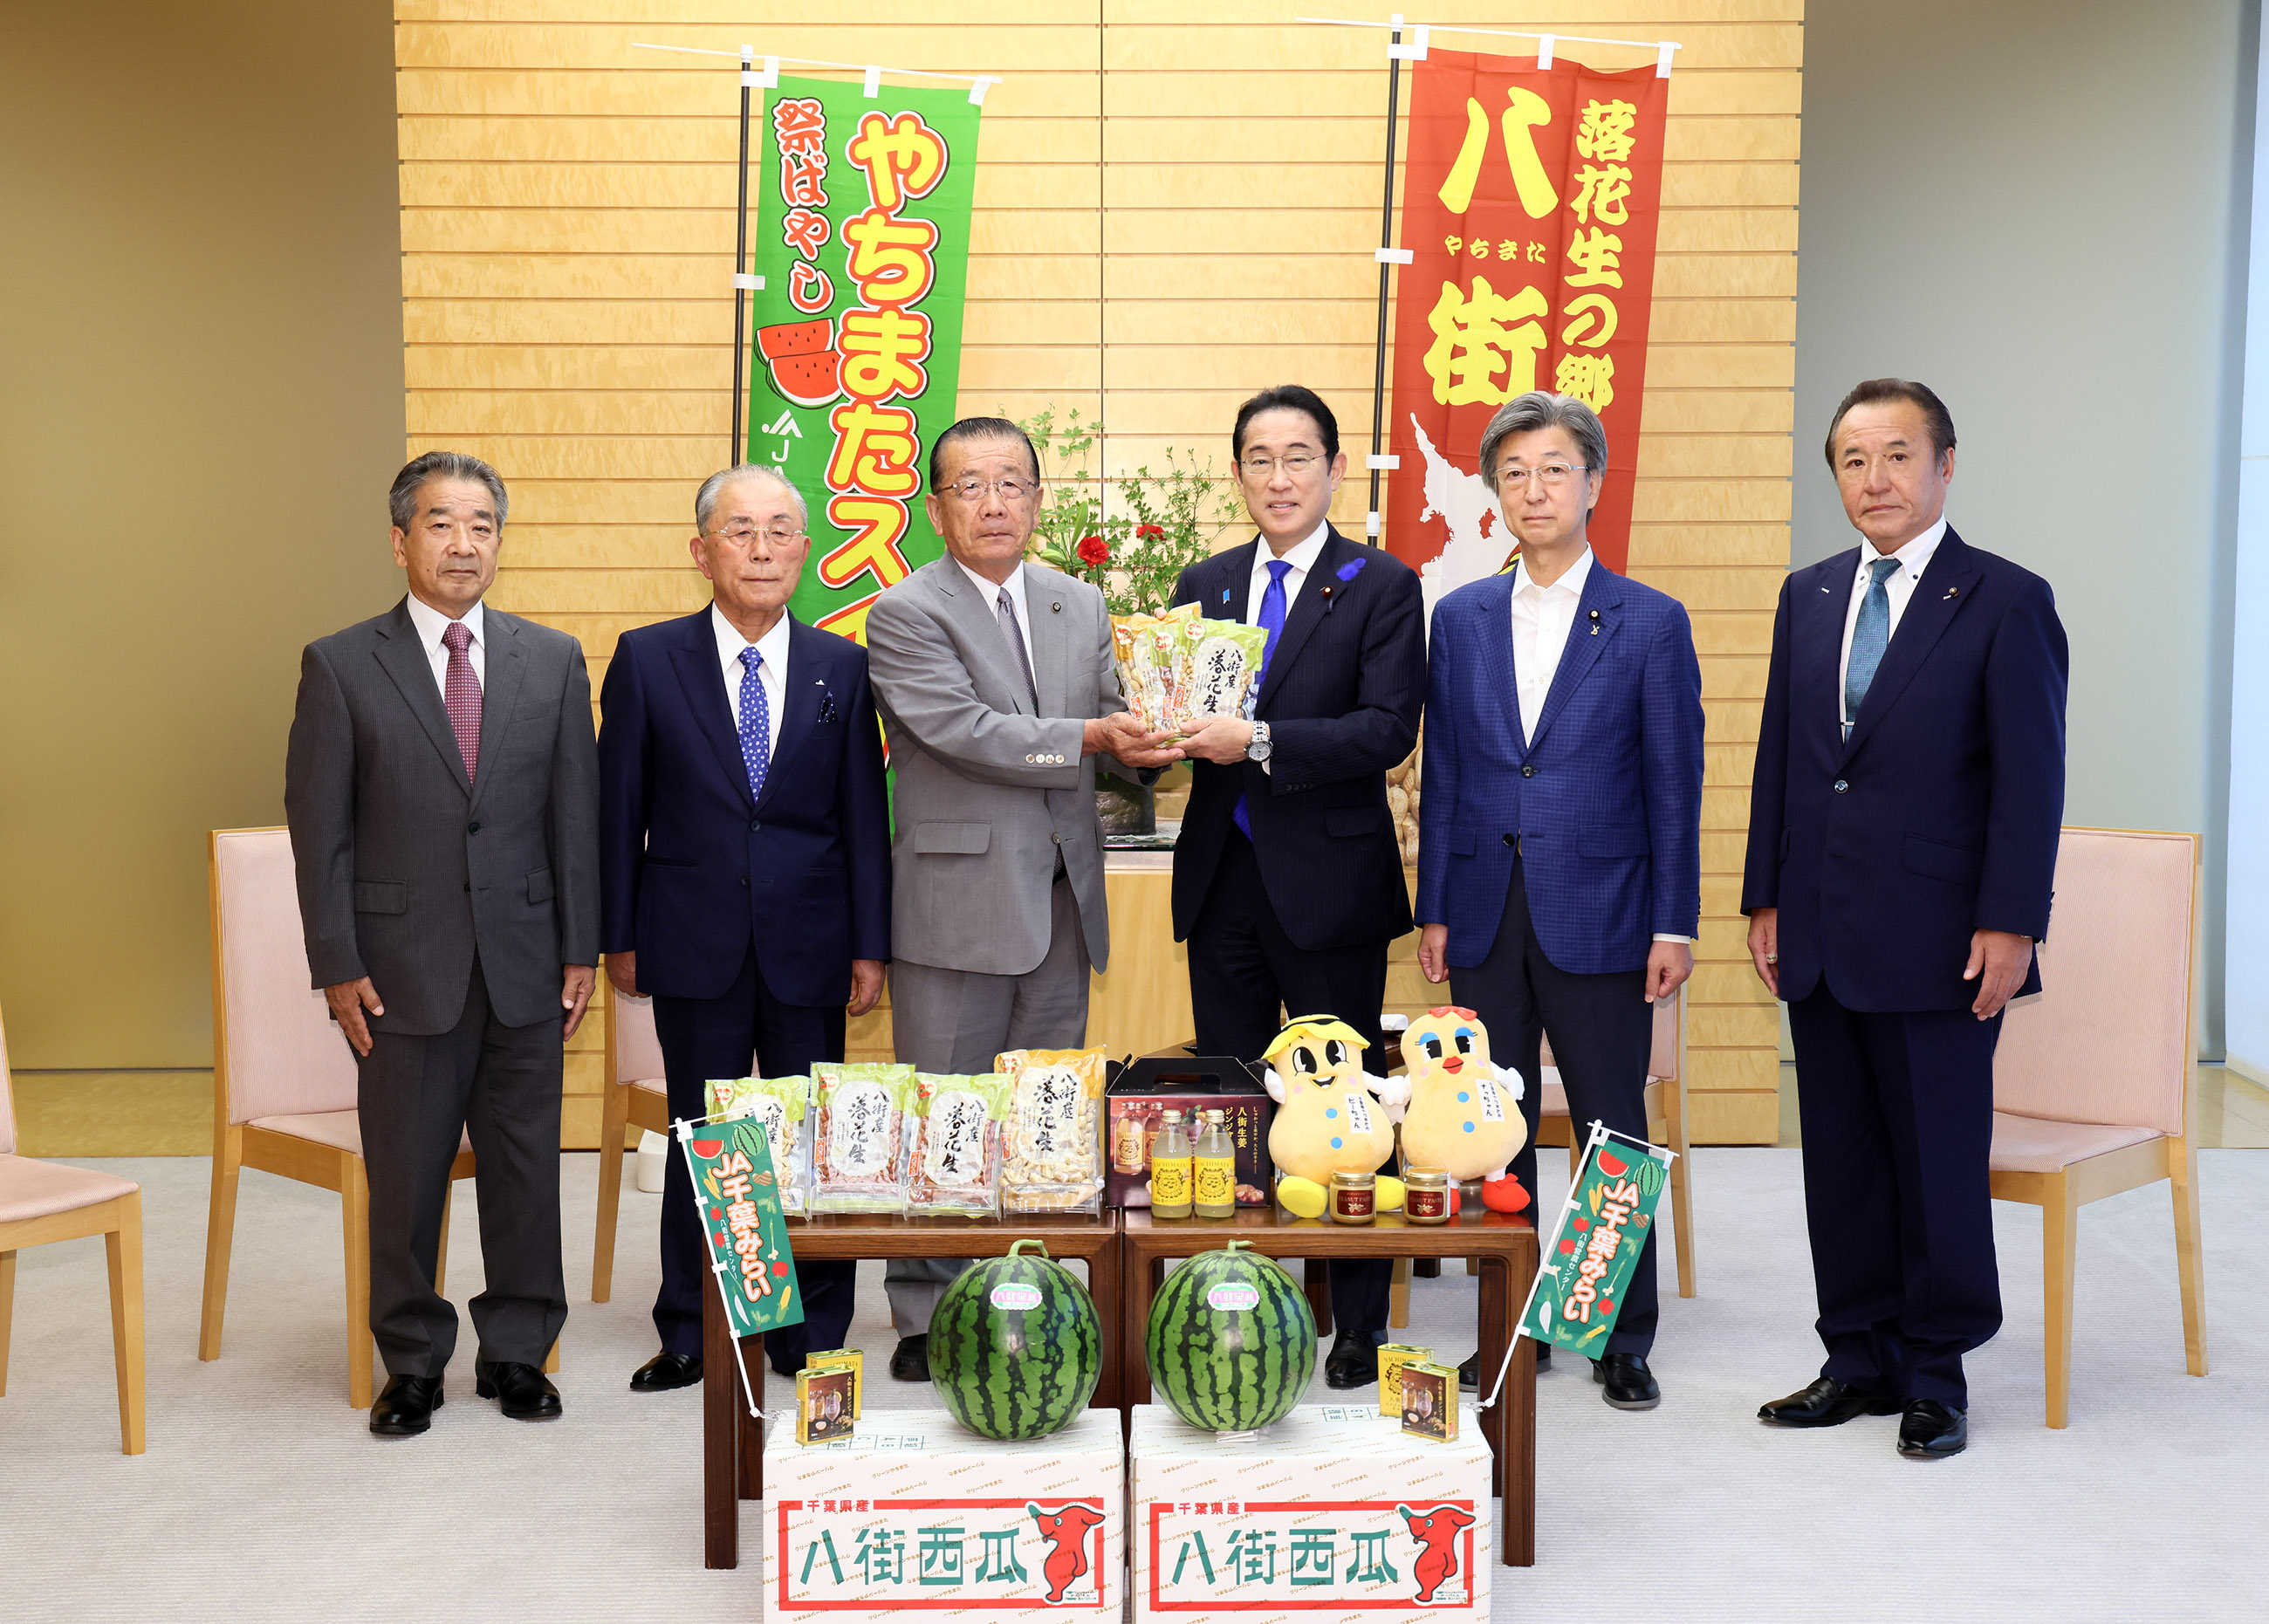 Presentation of Peanuts by Delegation from Yachimata City, Chiba Prefecture